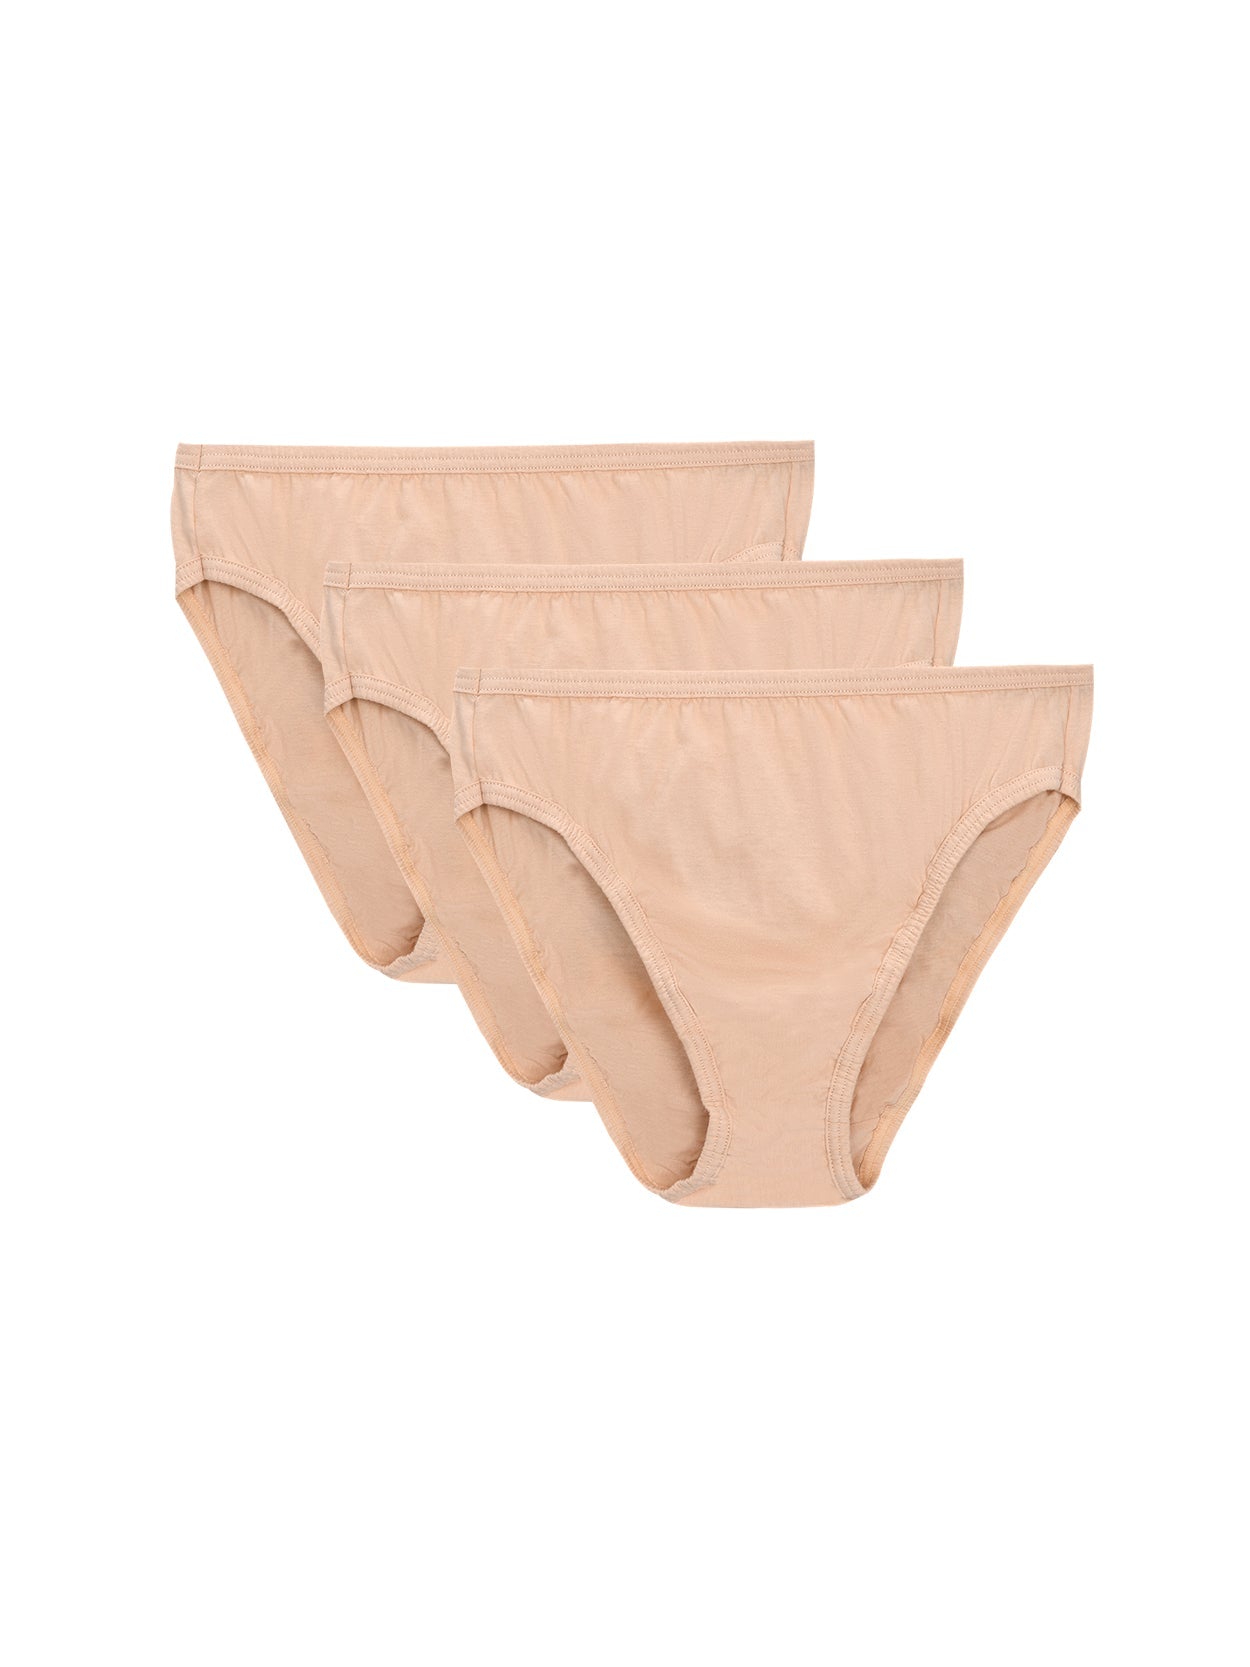 High-Cut Brief Cotton Plus Size Underwear 3 PCS Nude